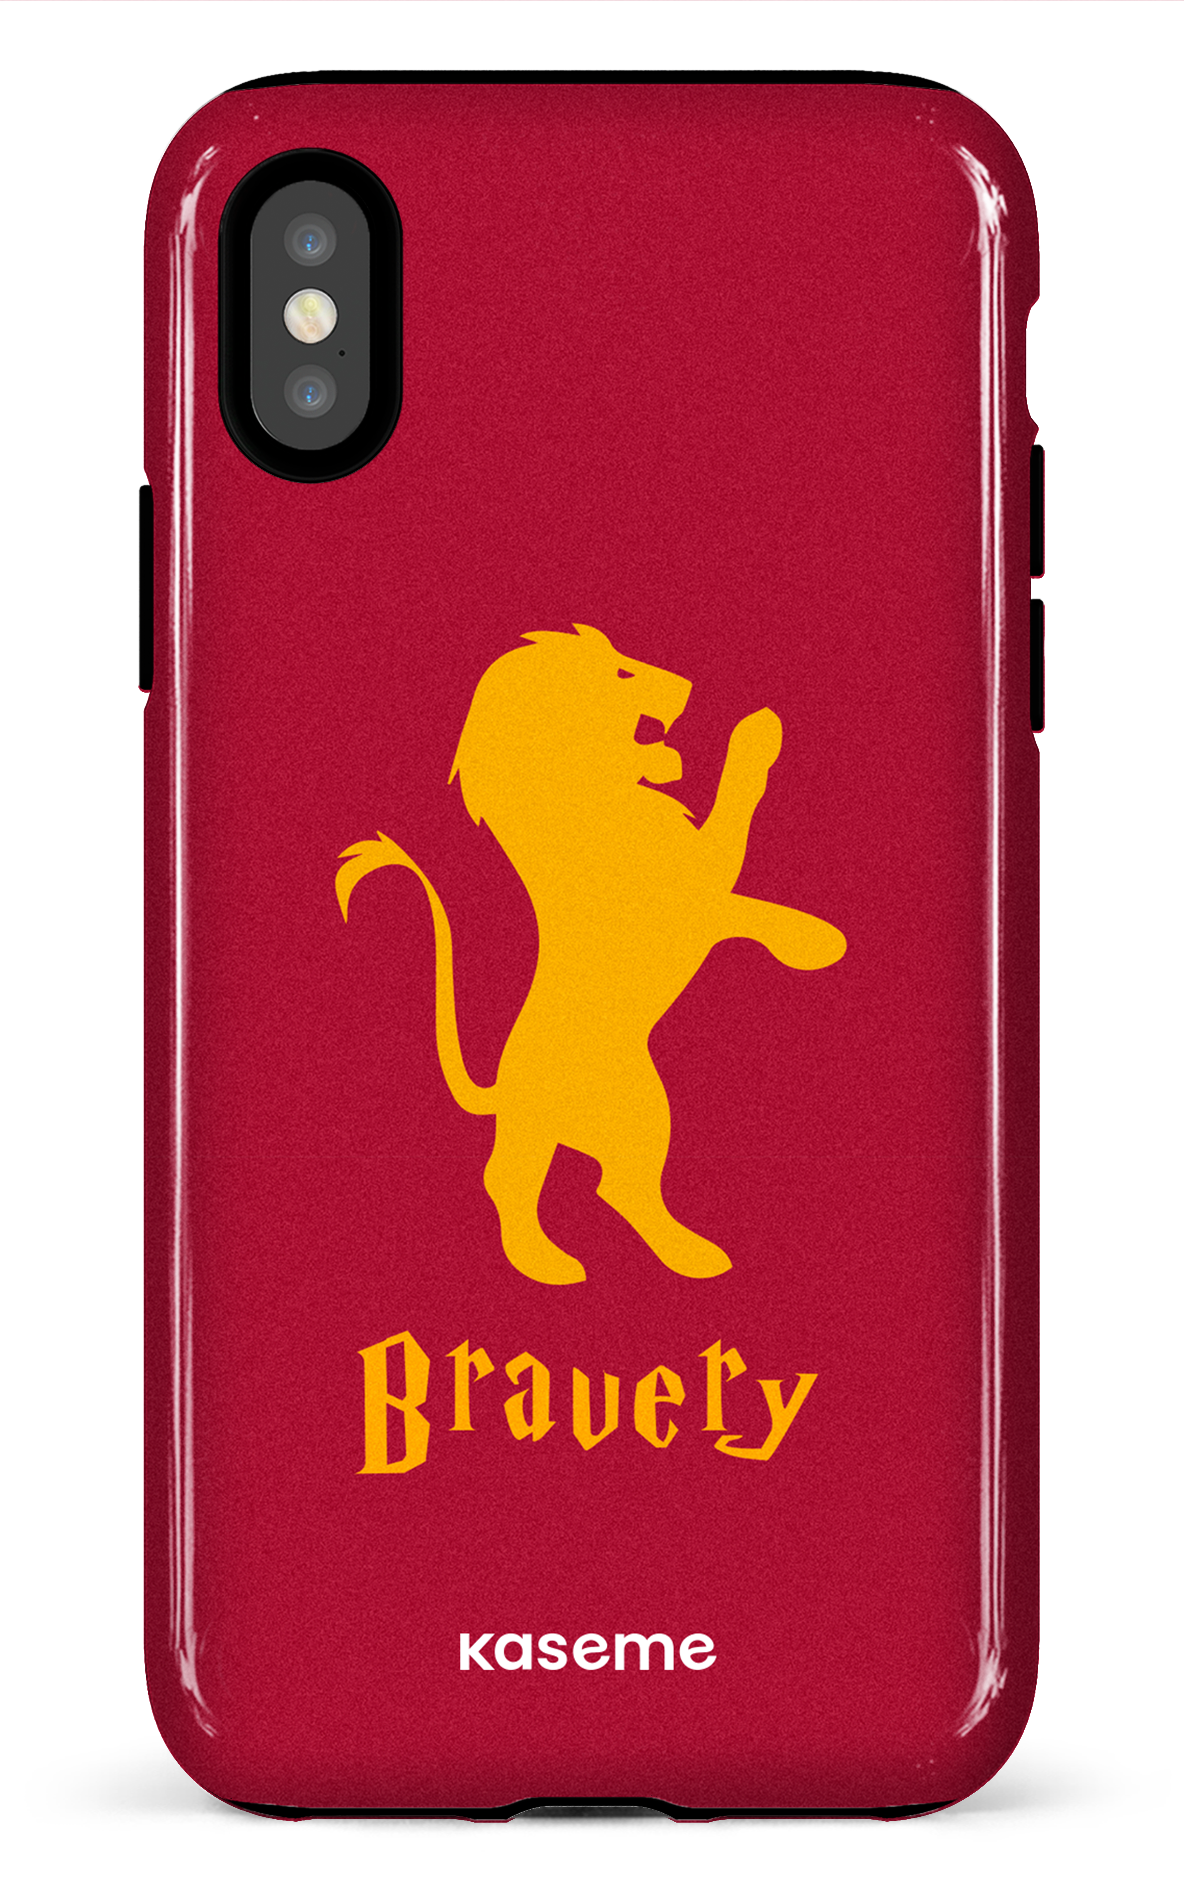 Bravery - iPhone X/XS